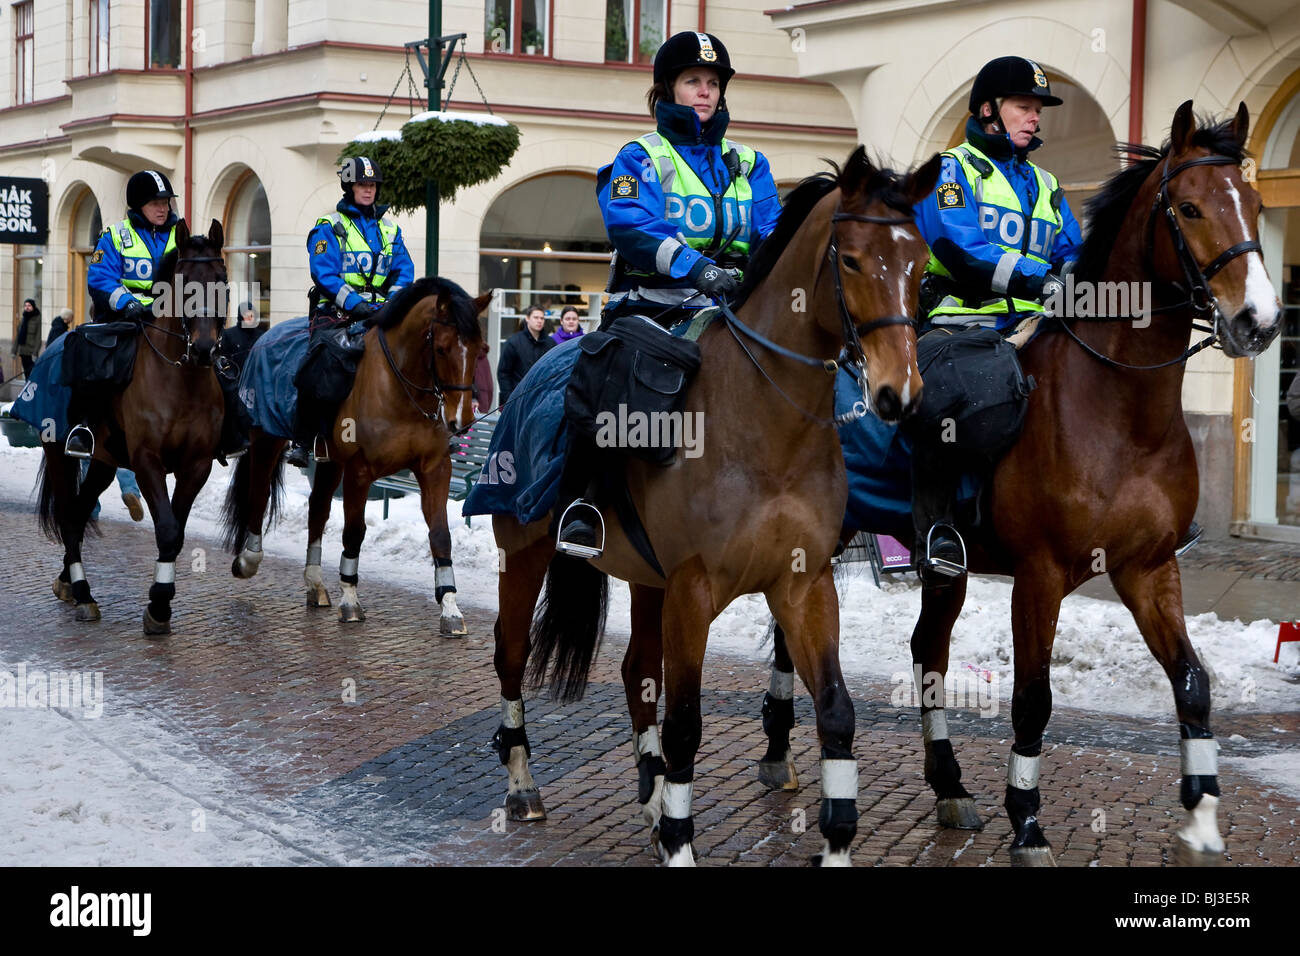 Quattro femminile svedese seduto sul cavallo, Svezia, Europa Foto Stock